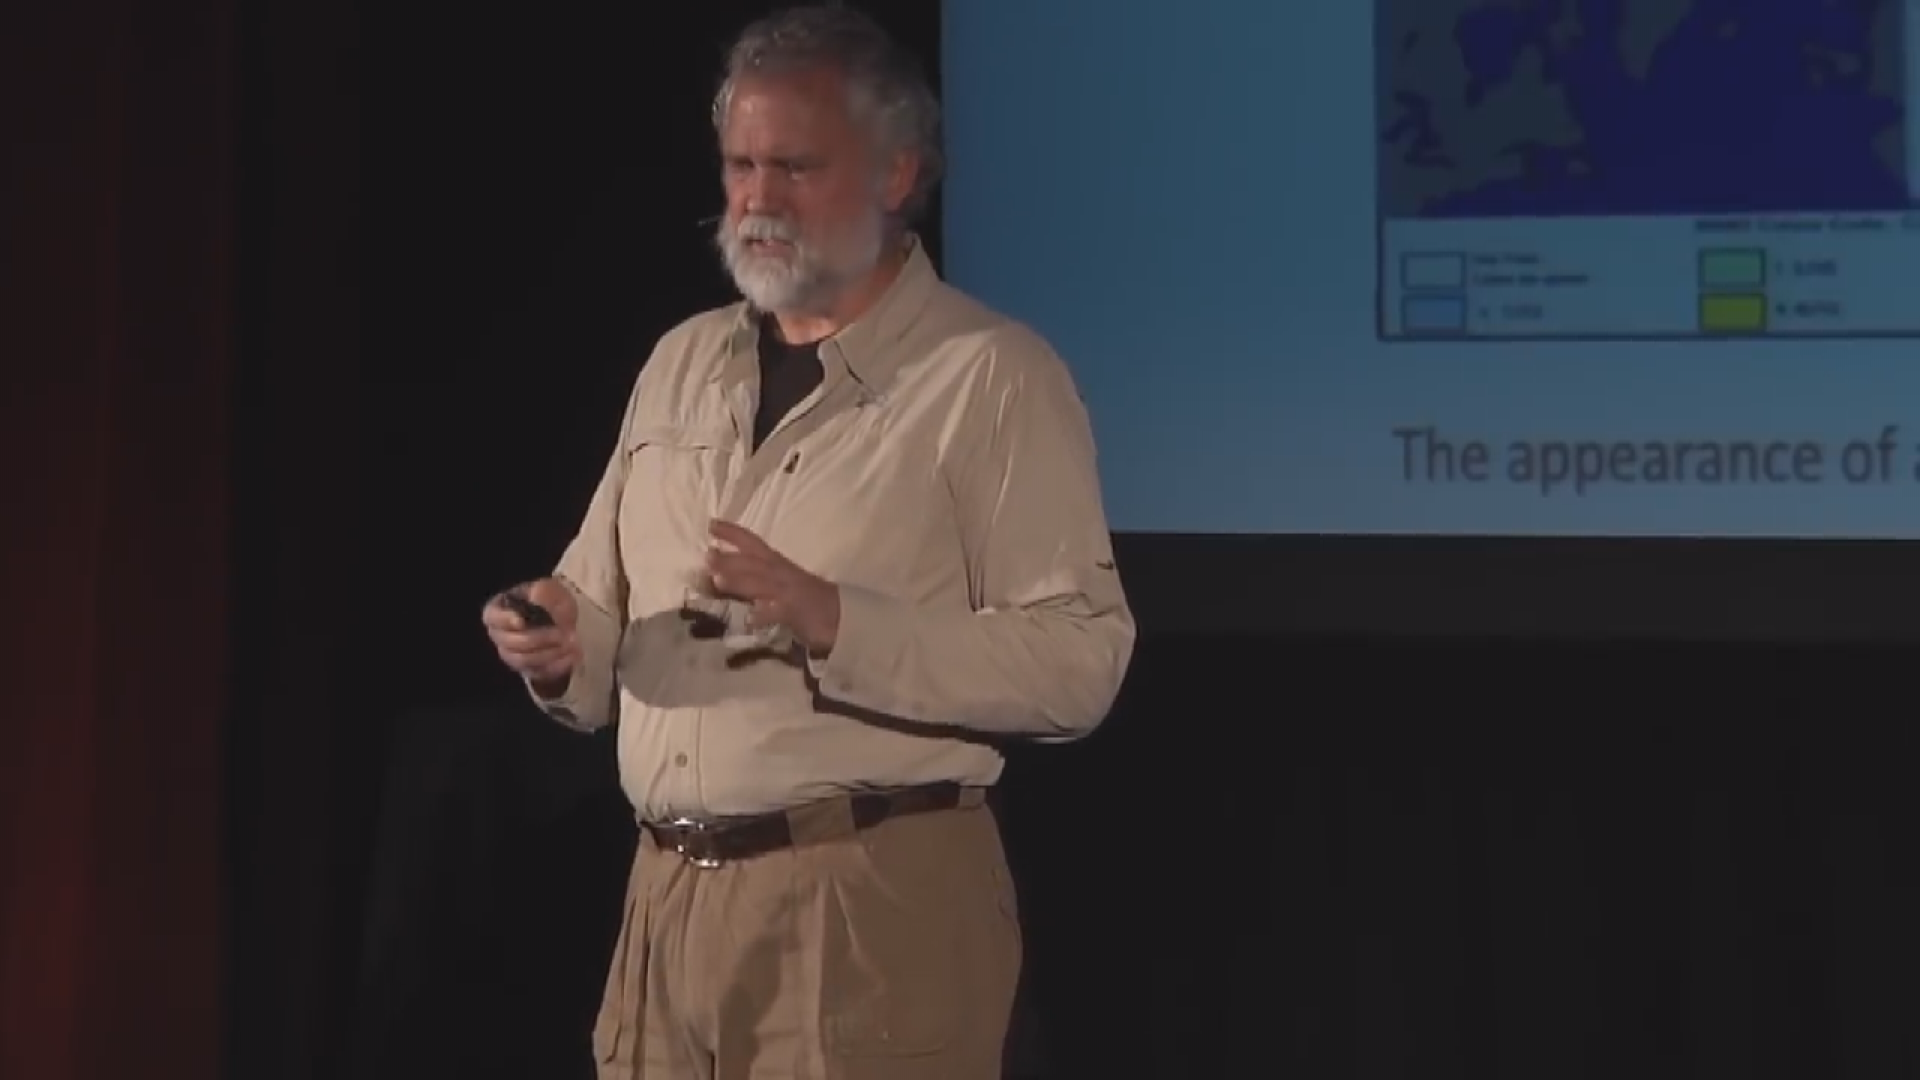 Dr. David Barber hosting a ‘Ted Talk’ at the University of Manitoba.